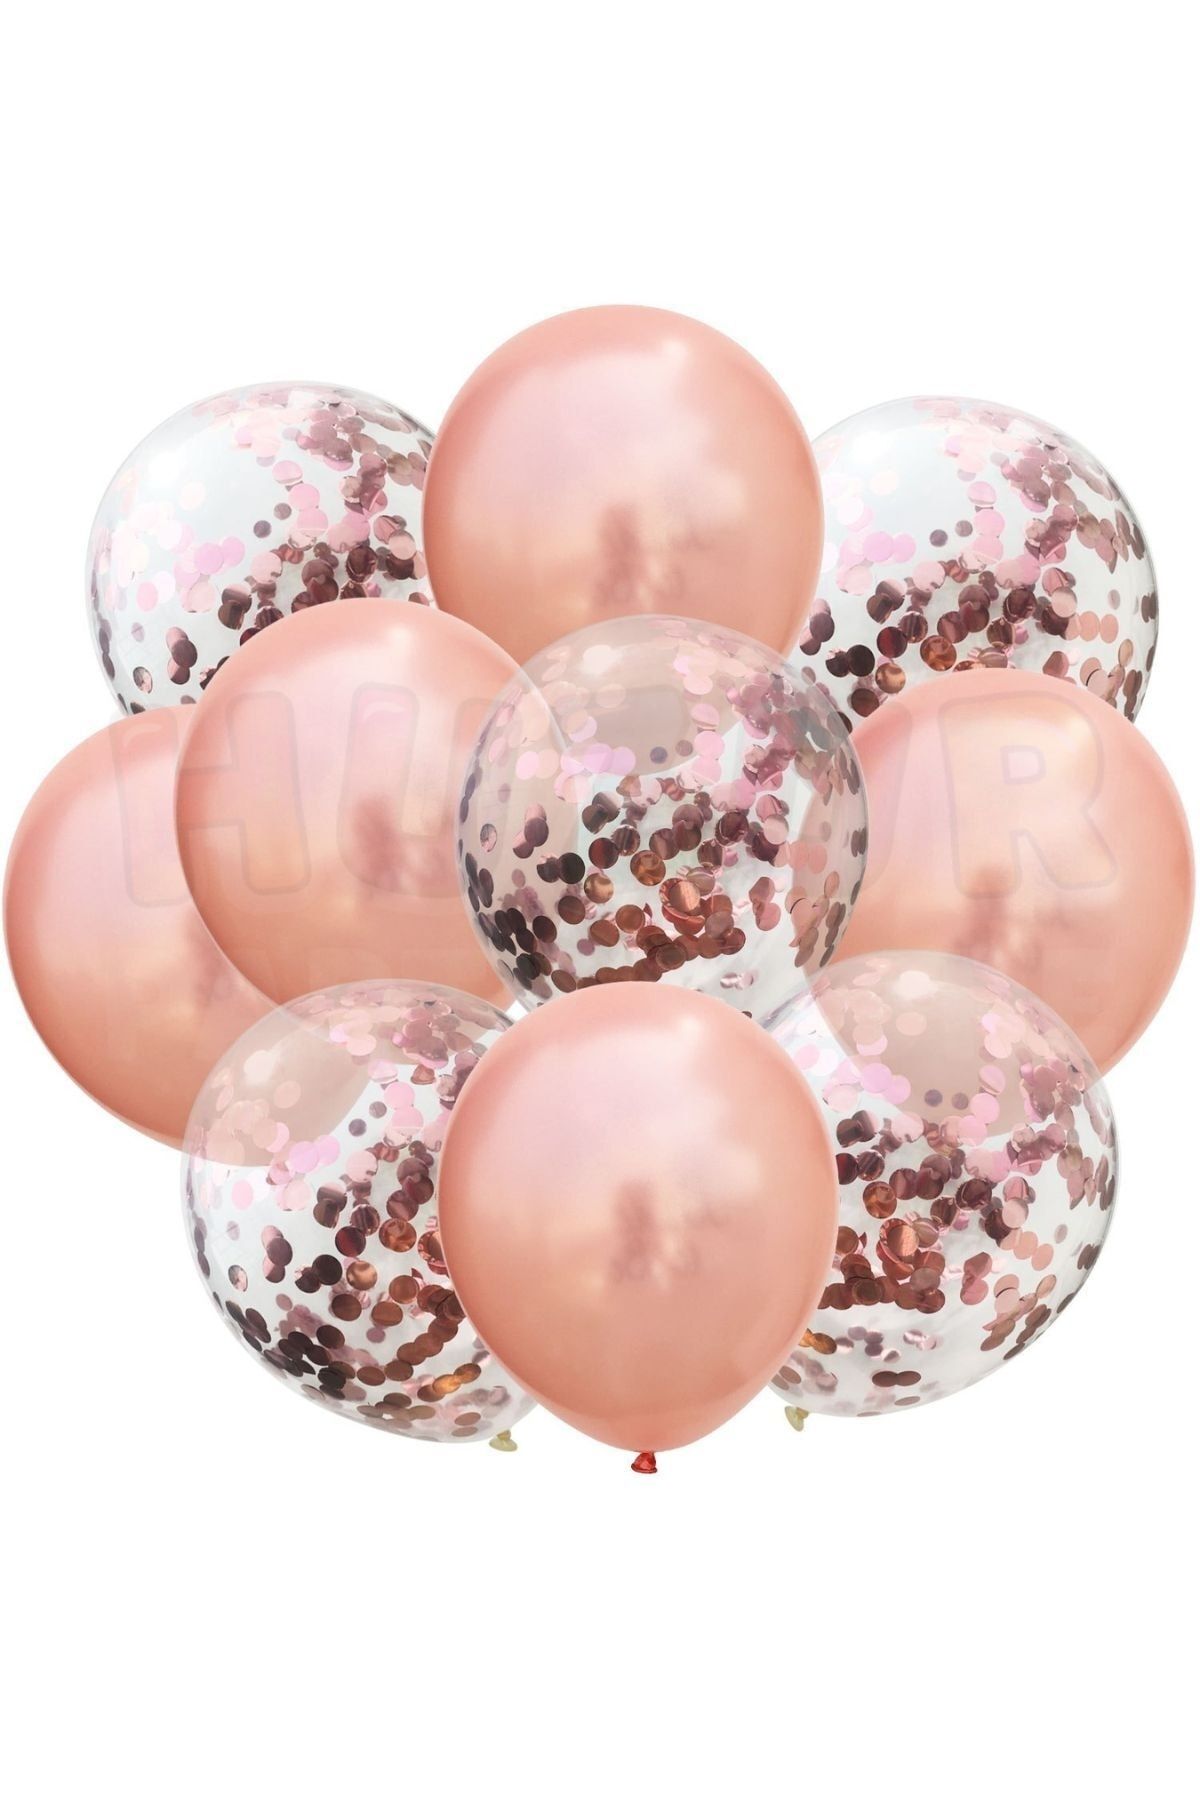 Huzur Party Store Rose Gold Konfetili Şeffaf Ve Rose Gold Metalik Balon Seti 20 Adet 30 Cm Içi Gözüken Pullu Balon